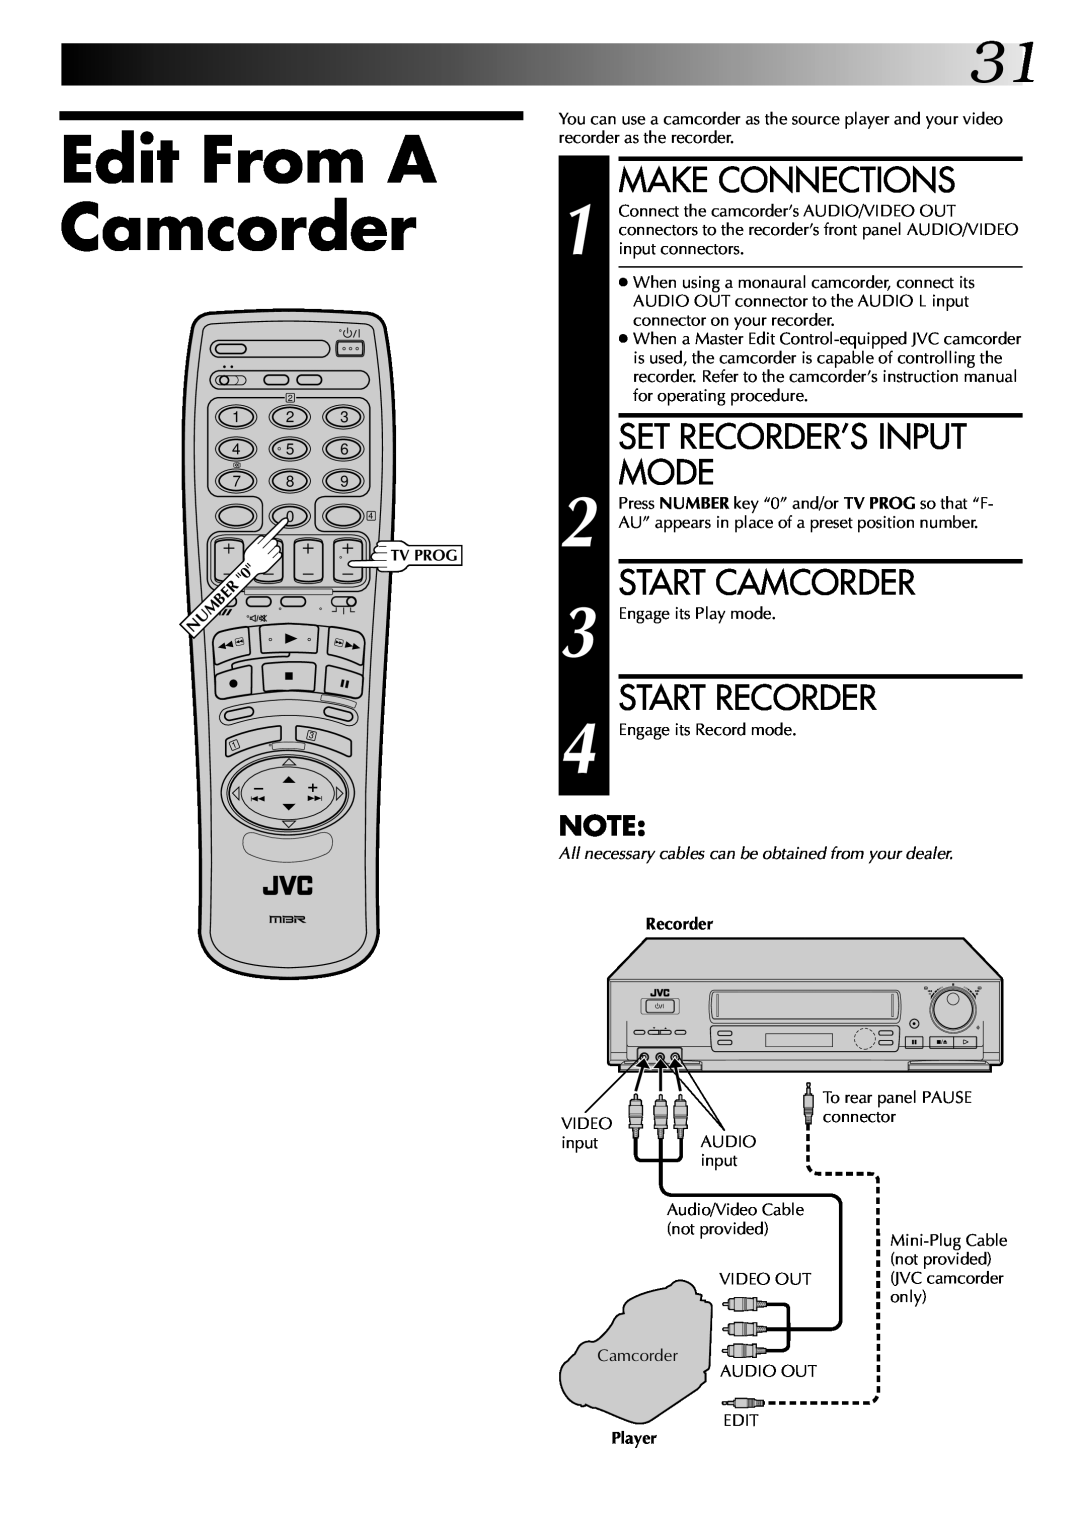 JVC HR-DD845EK Edit From A Camcorder, Set Recorder’S Input Mode, Start Camcorder, Start Recorder, Make Connections 